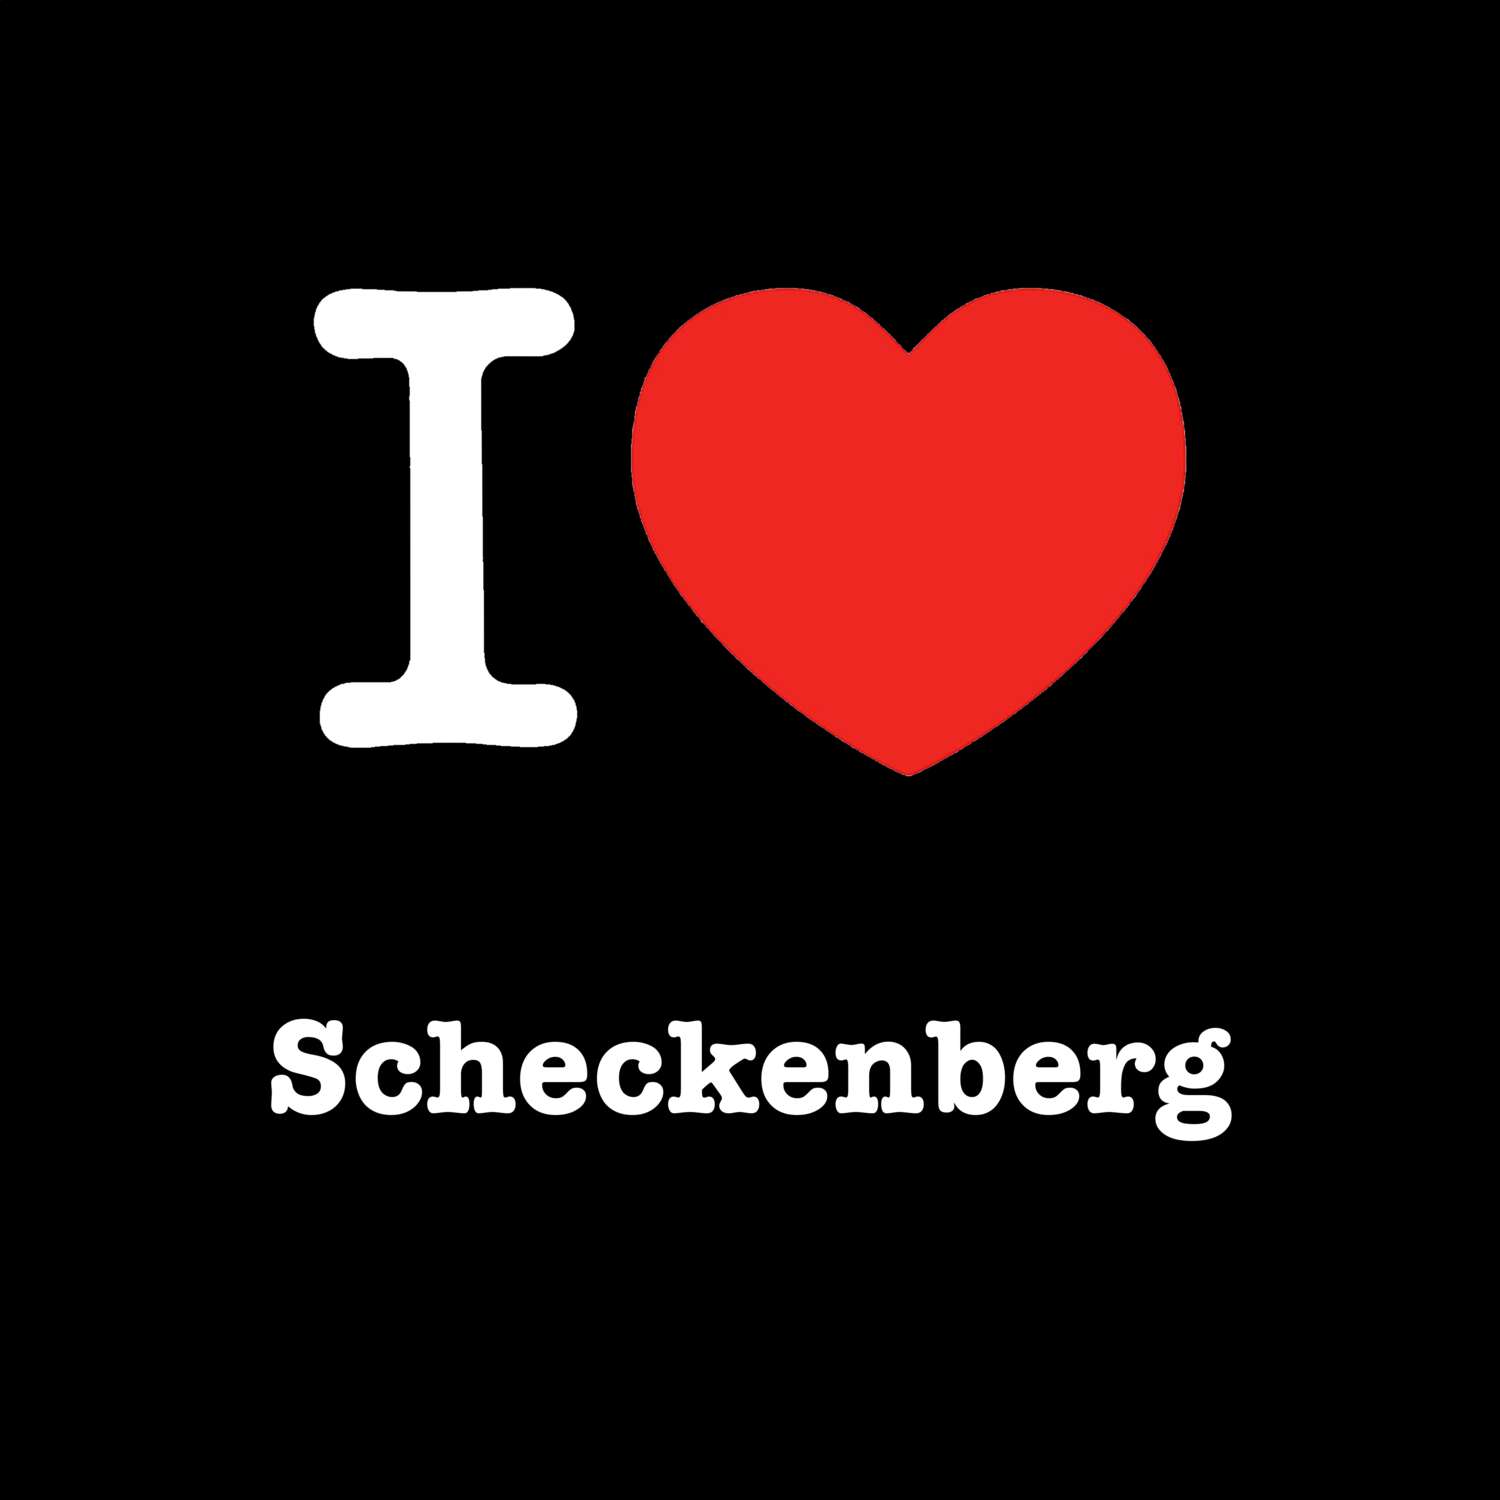 Scheckenberg T-Shirt »I love«